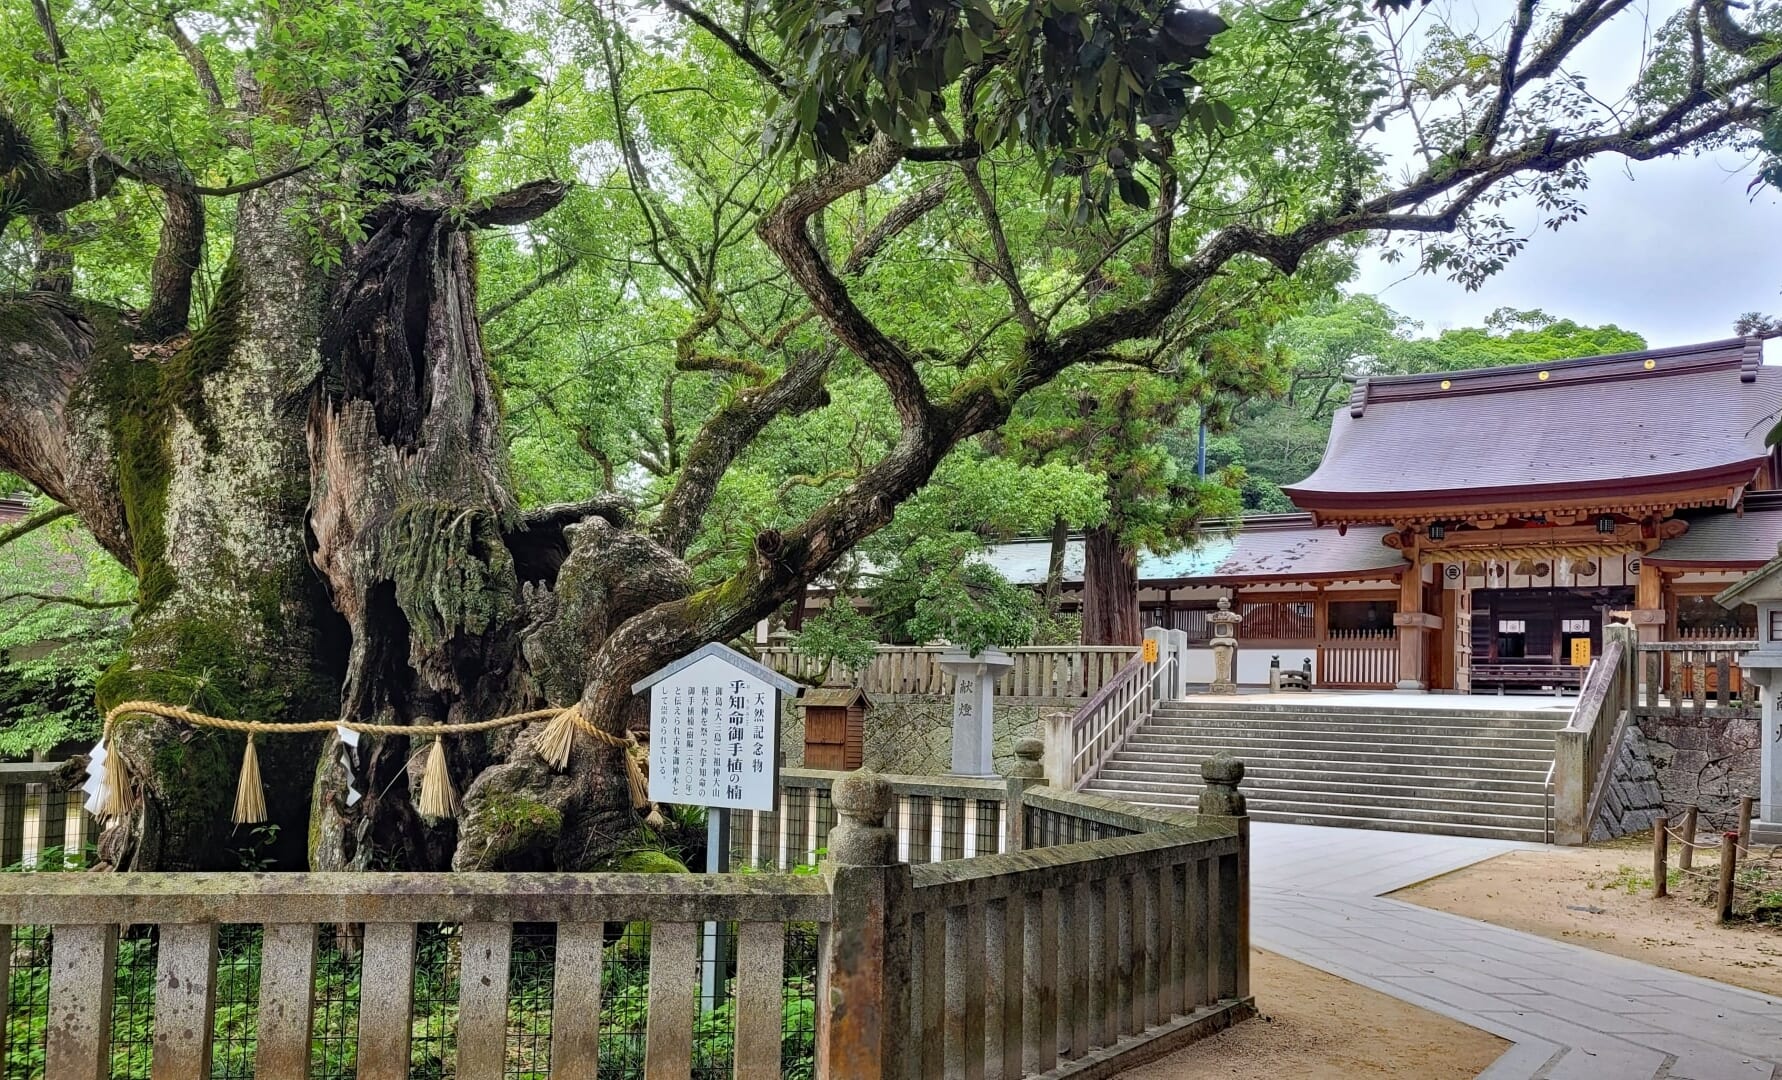 Oyamazumi Shrine's sacred milenarian Kusunoki Tree